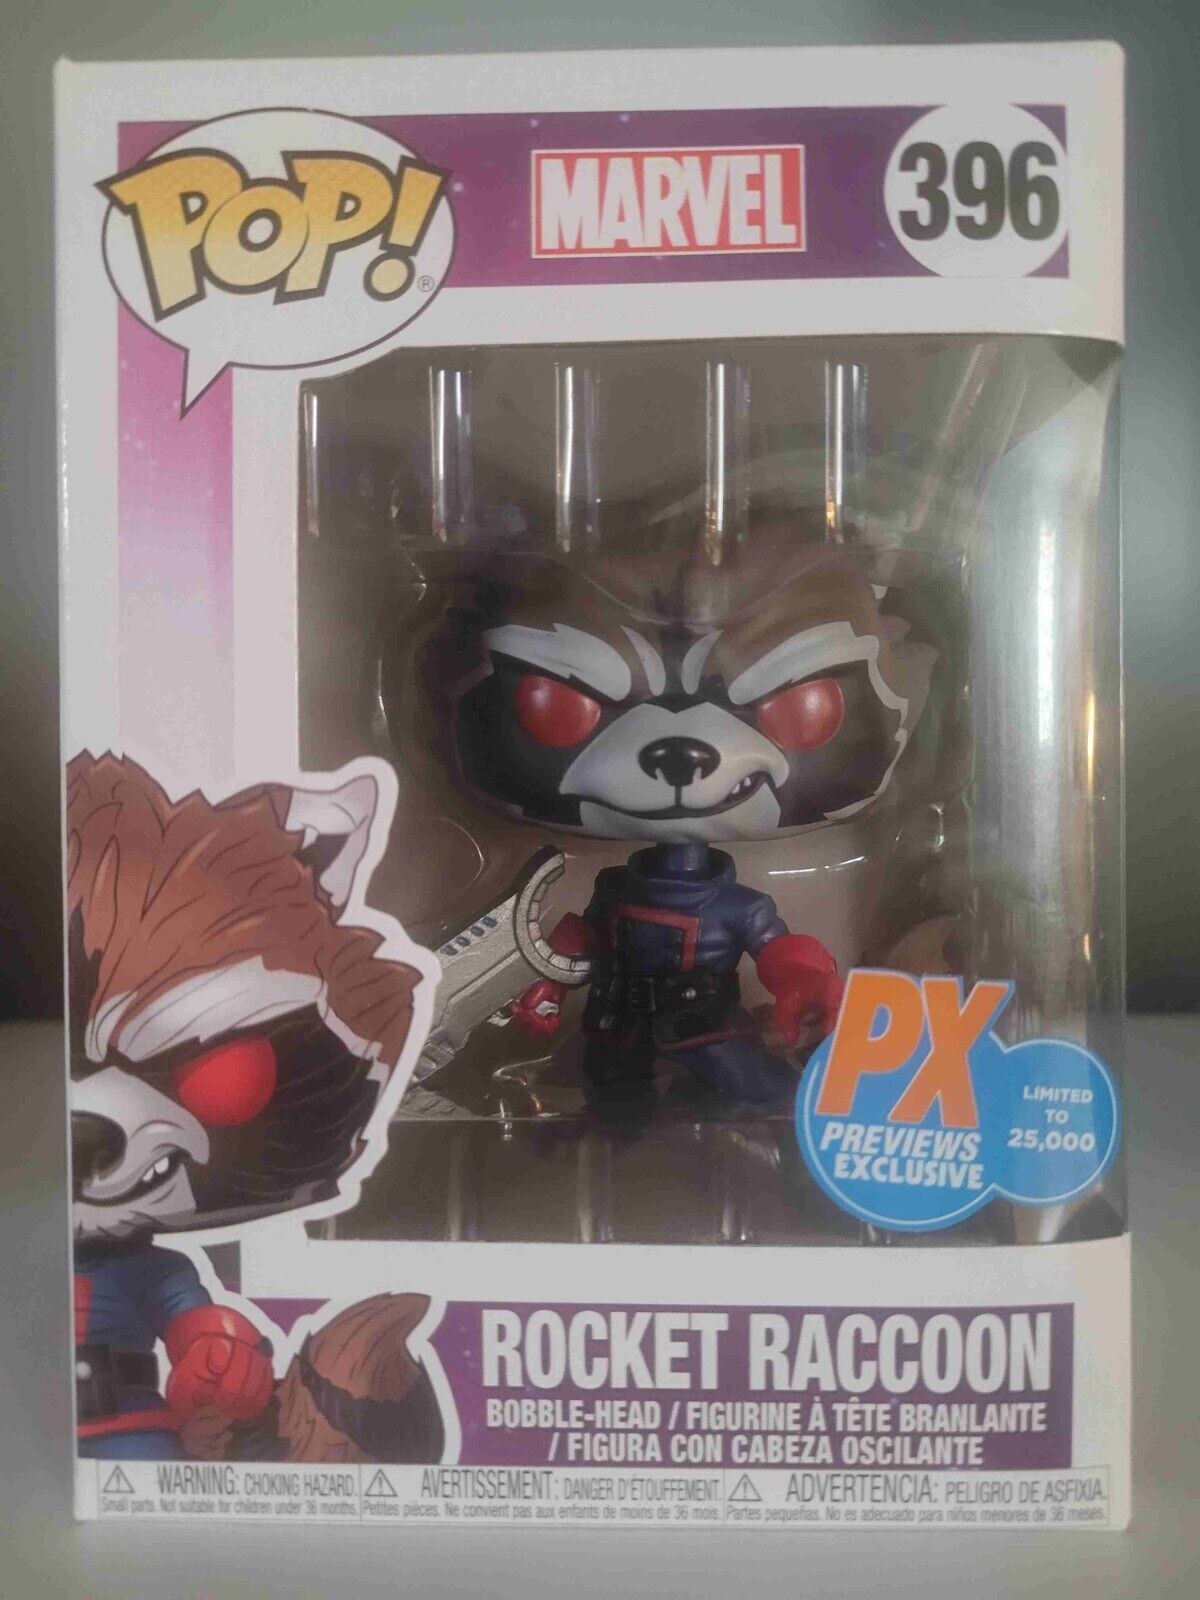 Funko POP Marvel Rocket Raccoon #396 PX Exclusive Limited 25,000 guardians